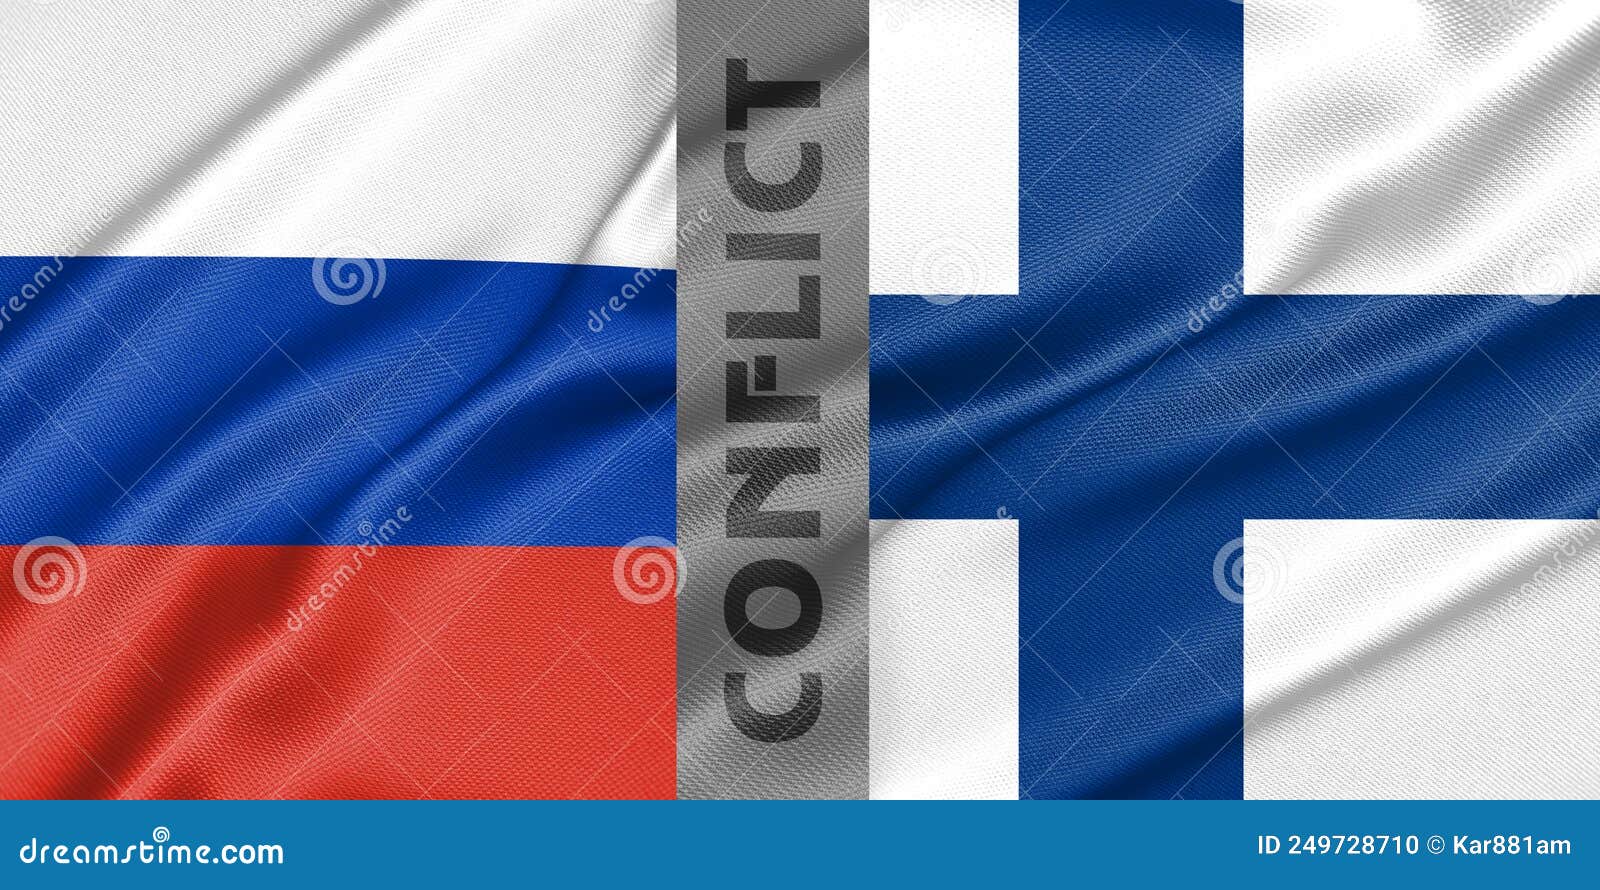 conflict russia and finlandia, war between russia vs finlandia, fabric national flag russia and flag finlandia, war crisis concept